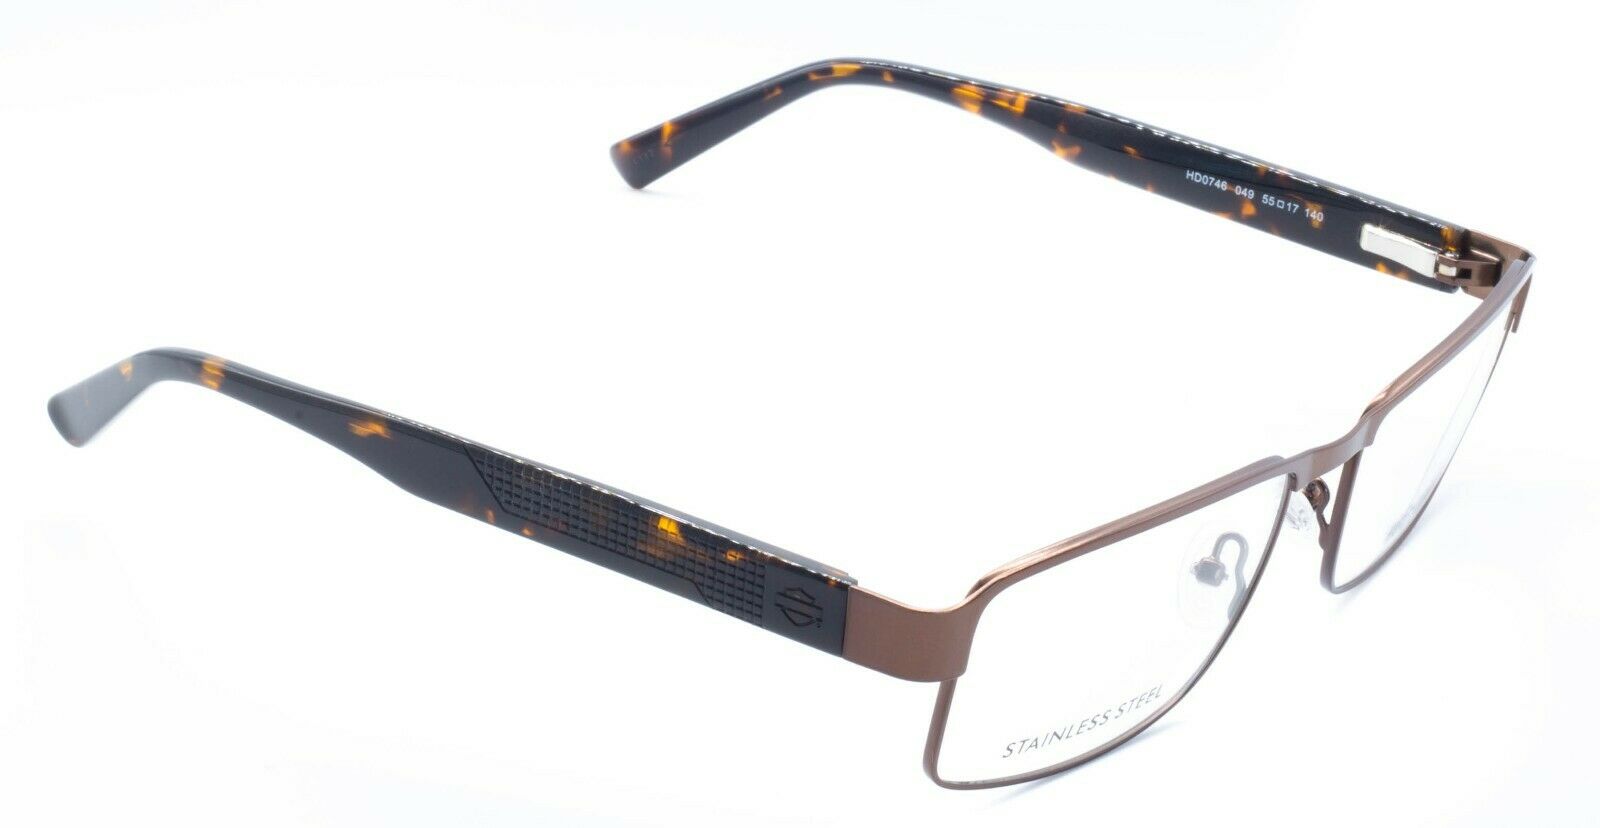 HARLEY-DAVIDSON HD0746 049 55mm Eyewear FRAMES RX Optical Eyeglasses Glasses New